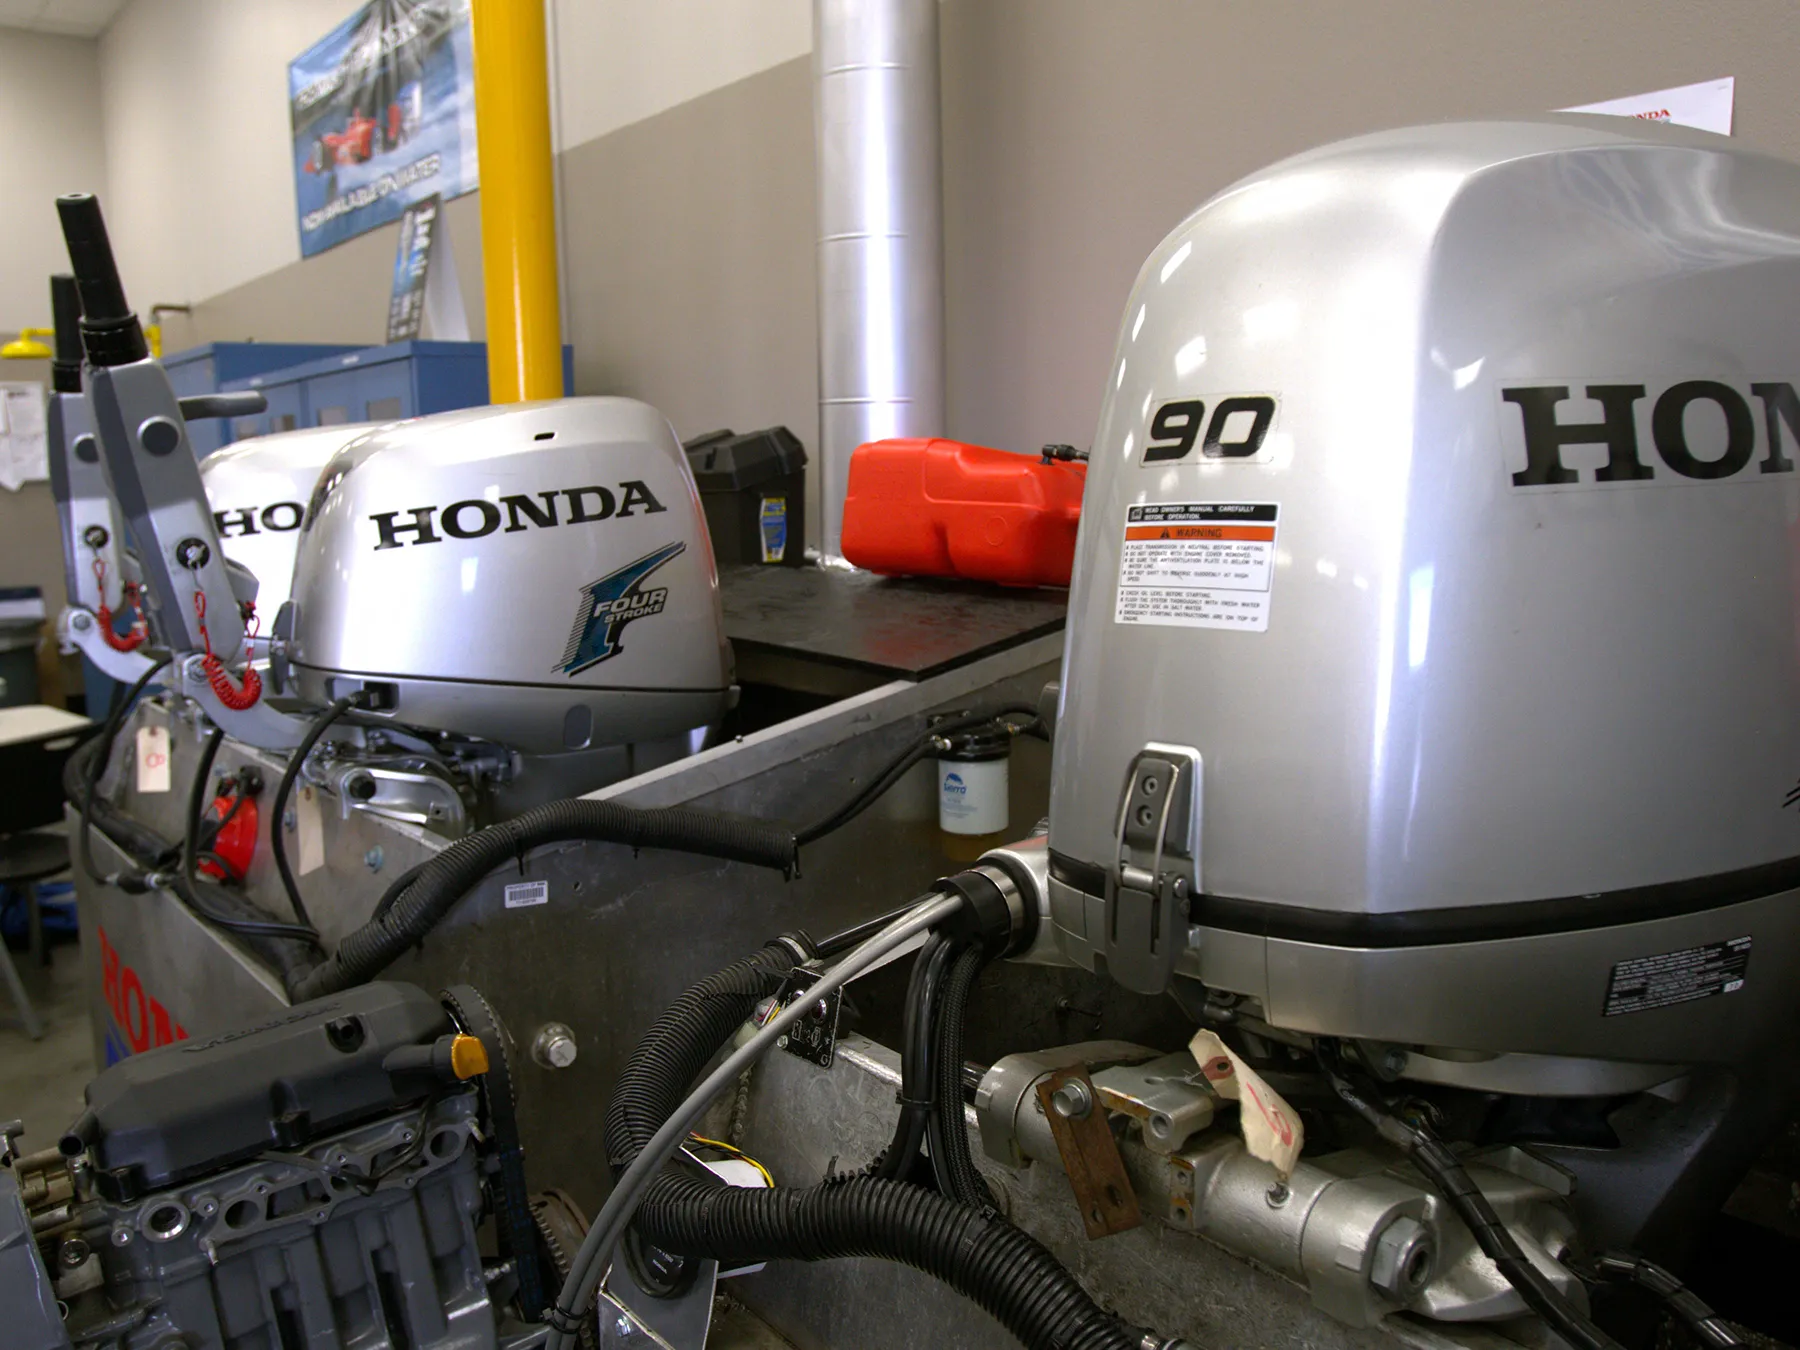 3 honda engines in the Honda marine lab